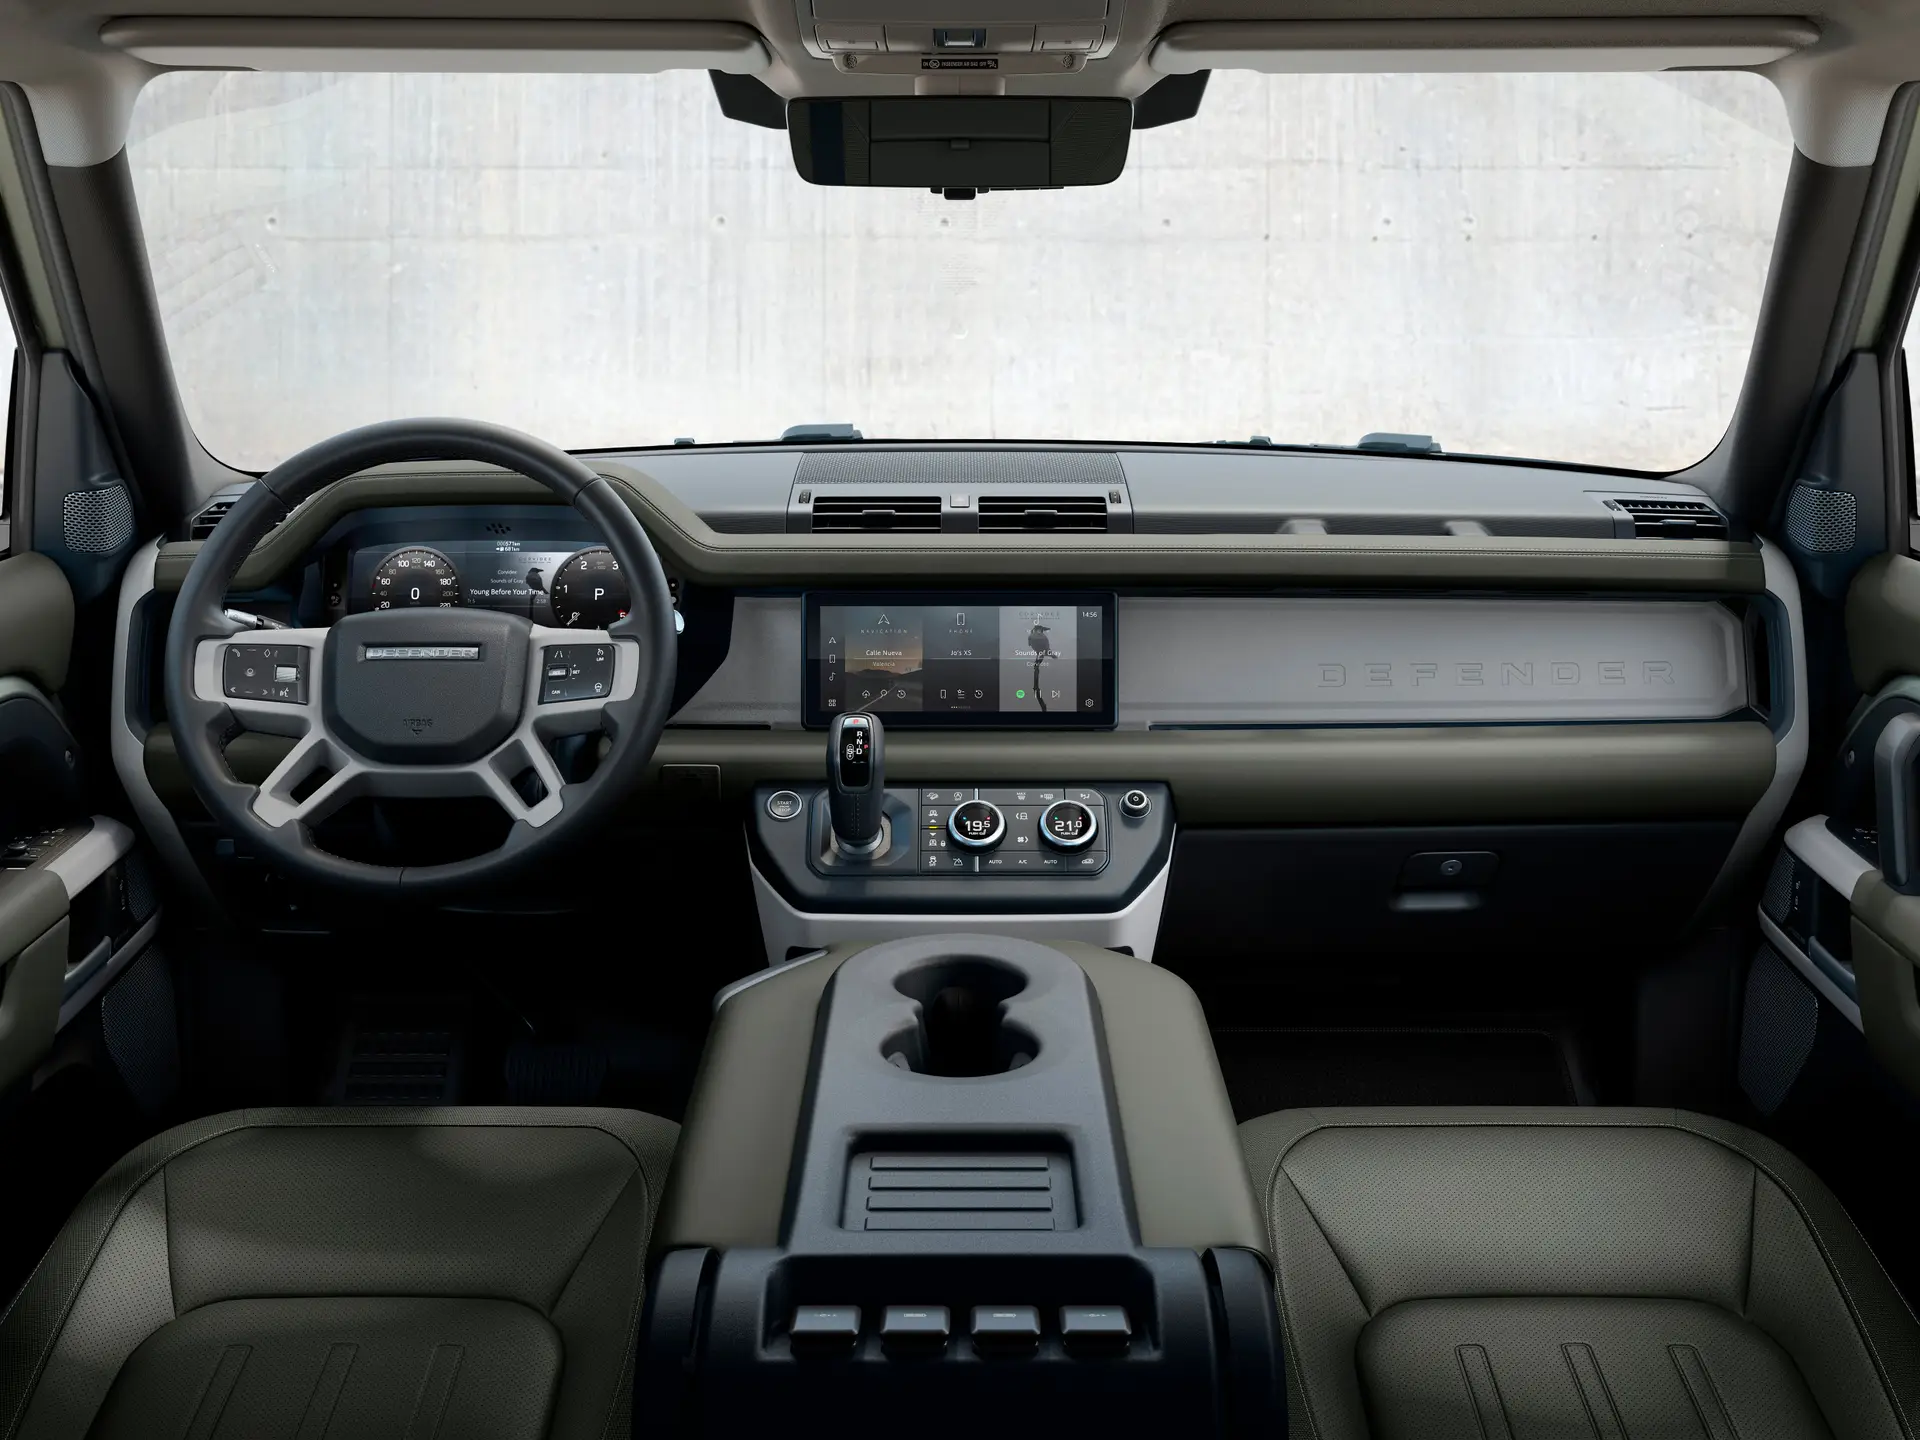 Land Rover Defender 90 front interior